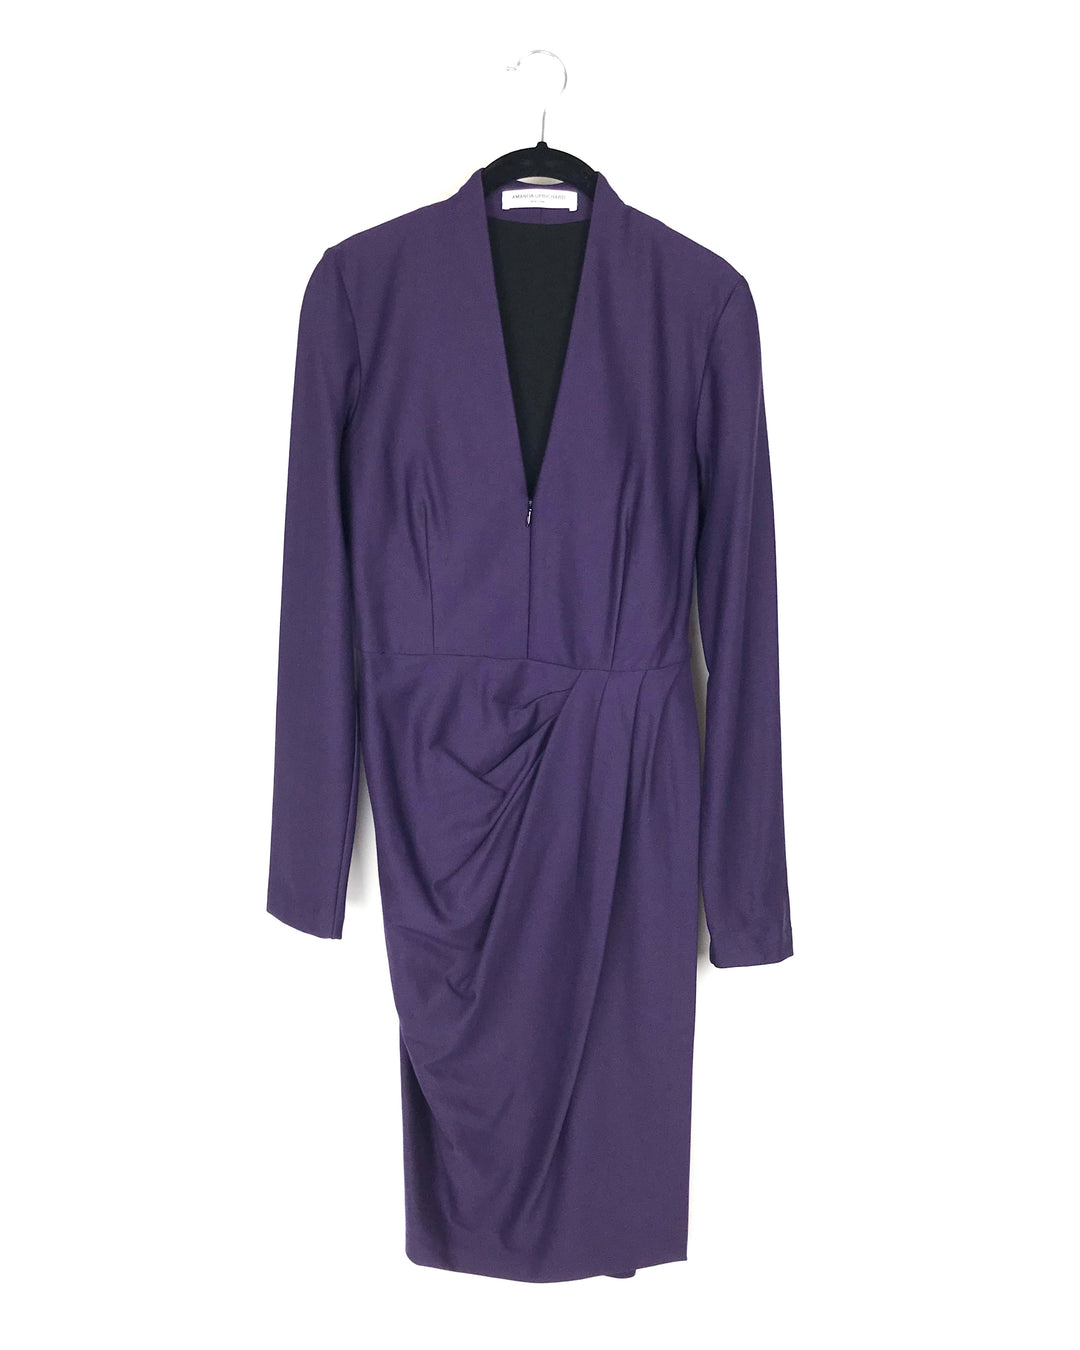 Purple Long Sleeve Dress - Small